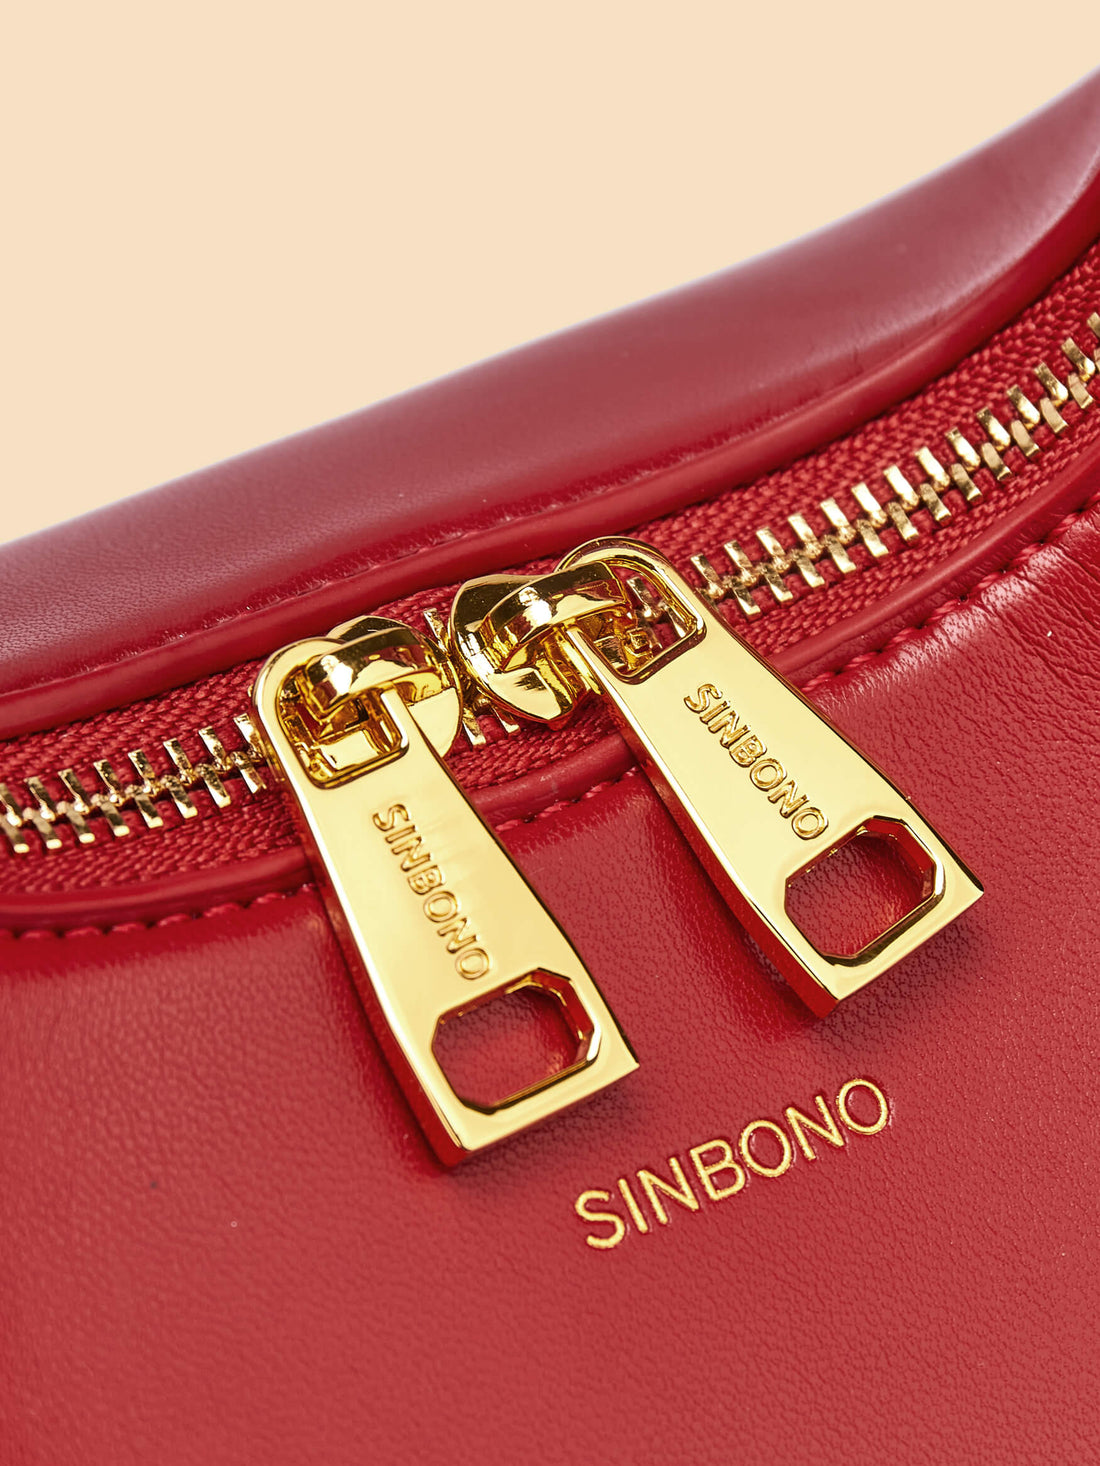 SINBONO Vienna Red Leather Handbags -Vegan Leather Women Bag